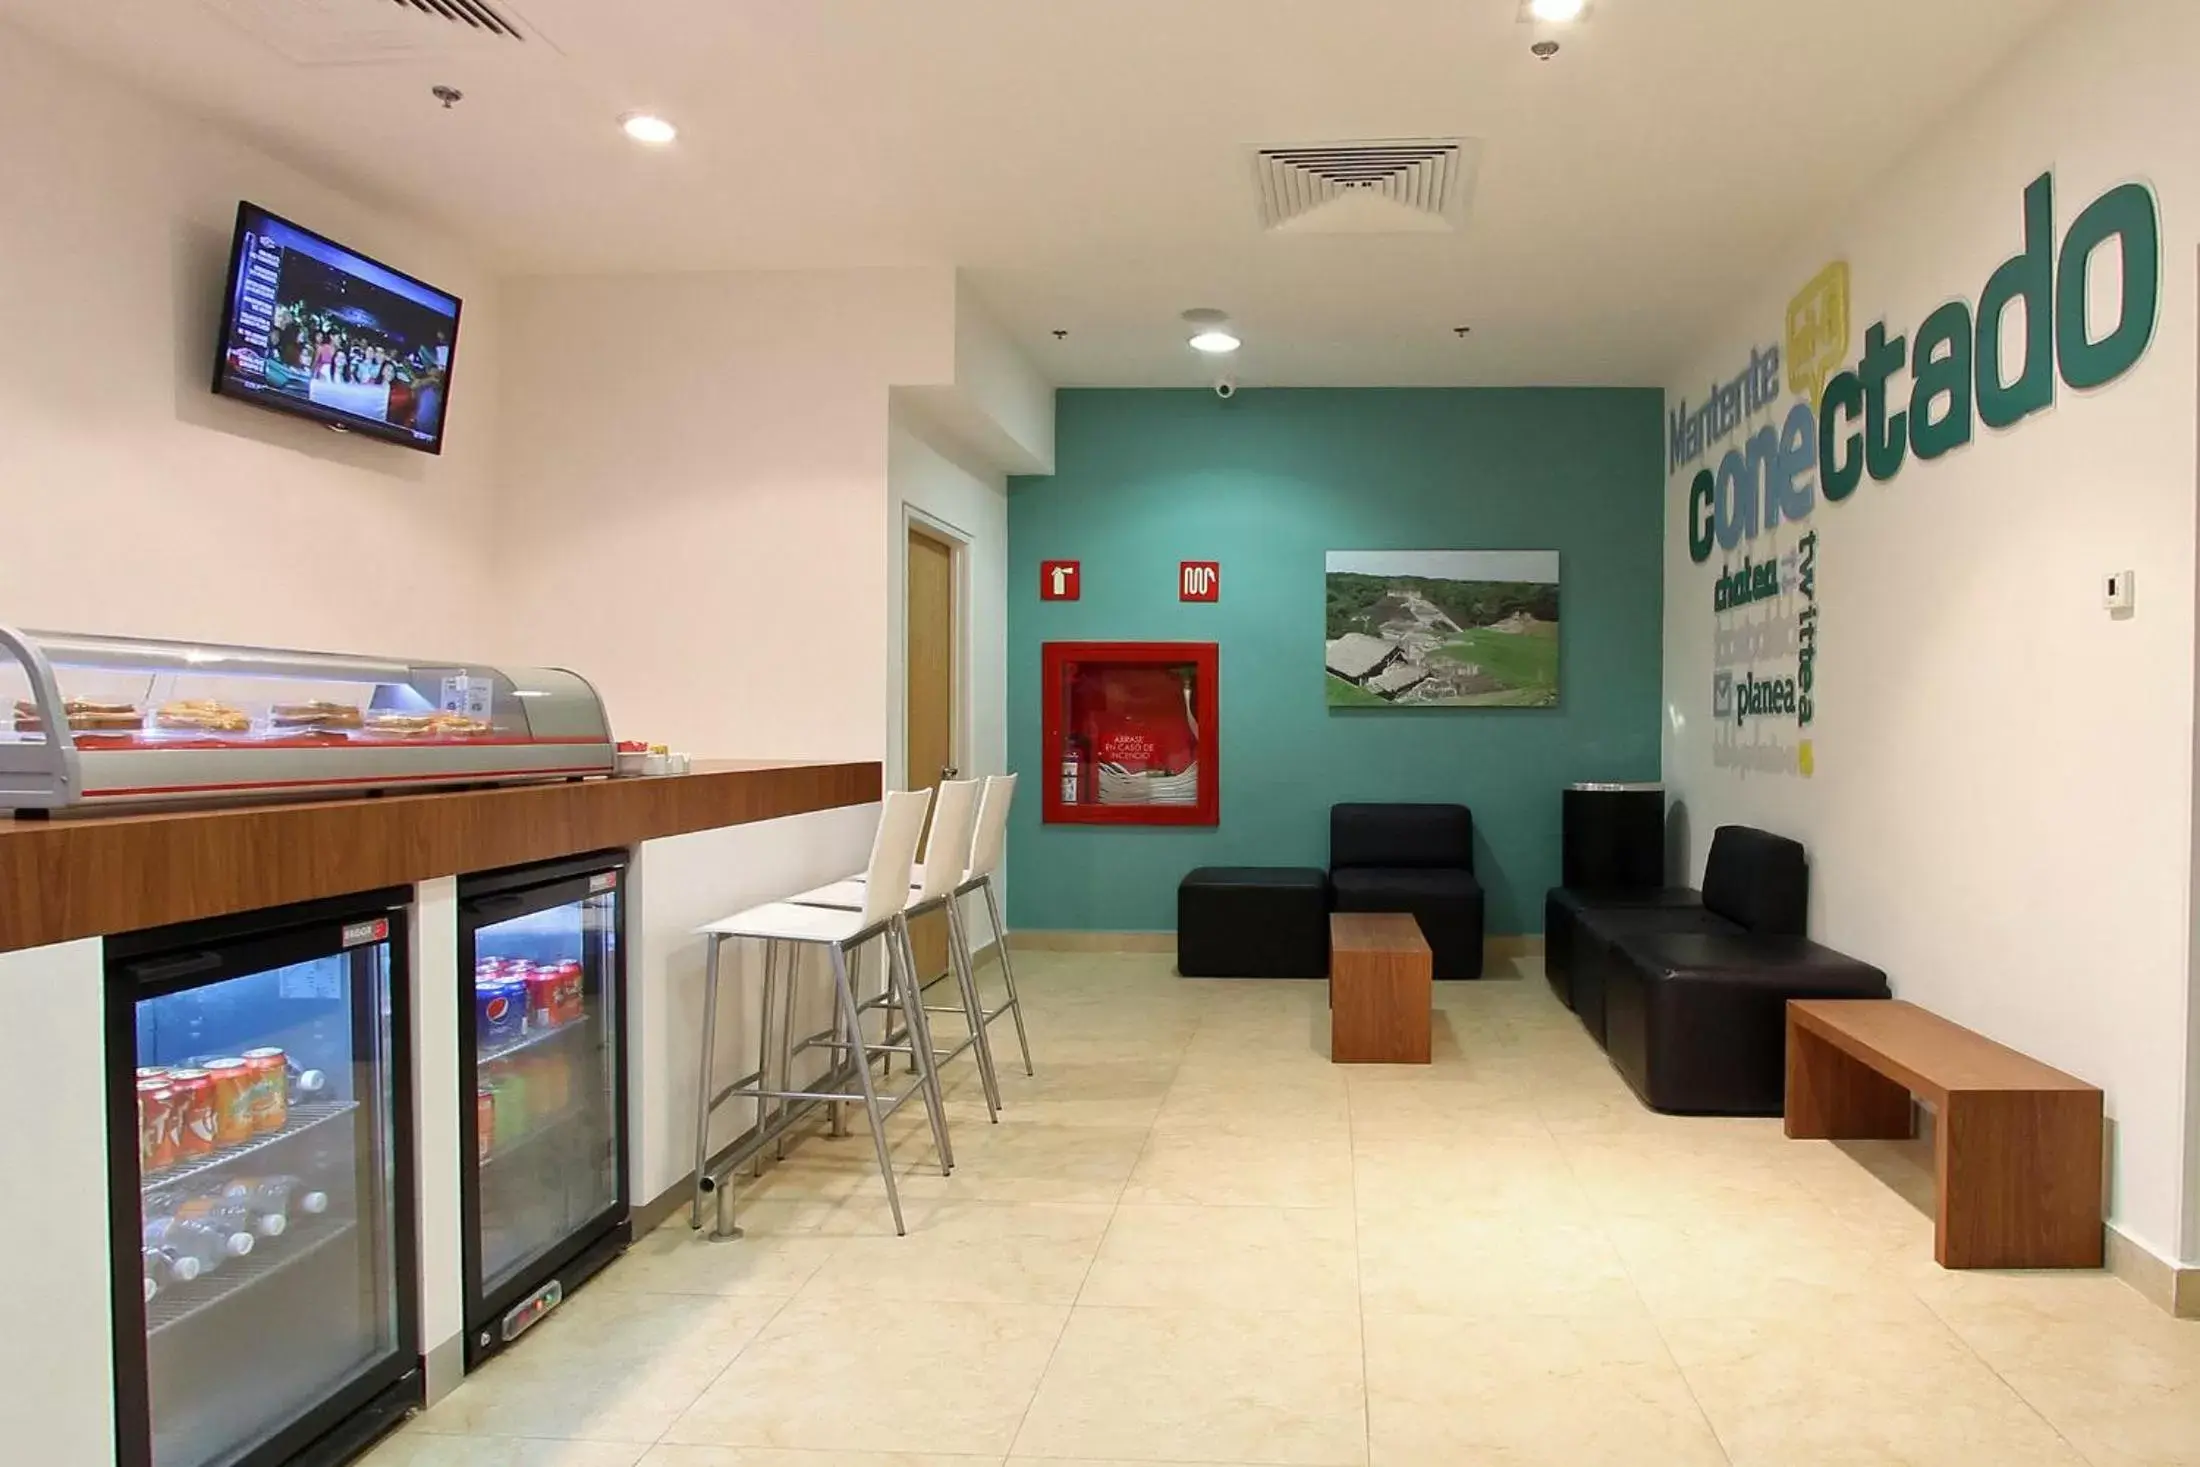 Lobby or reception in One Villahermosa Centro